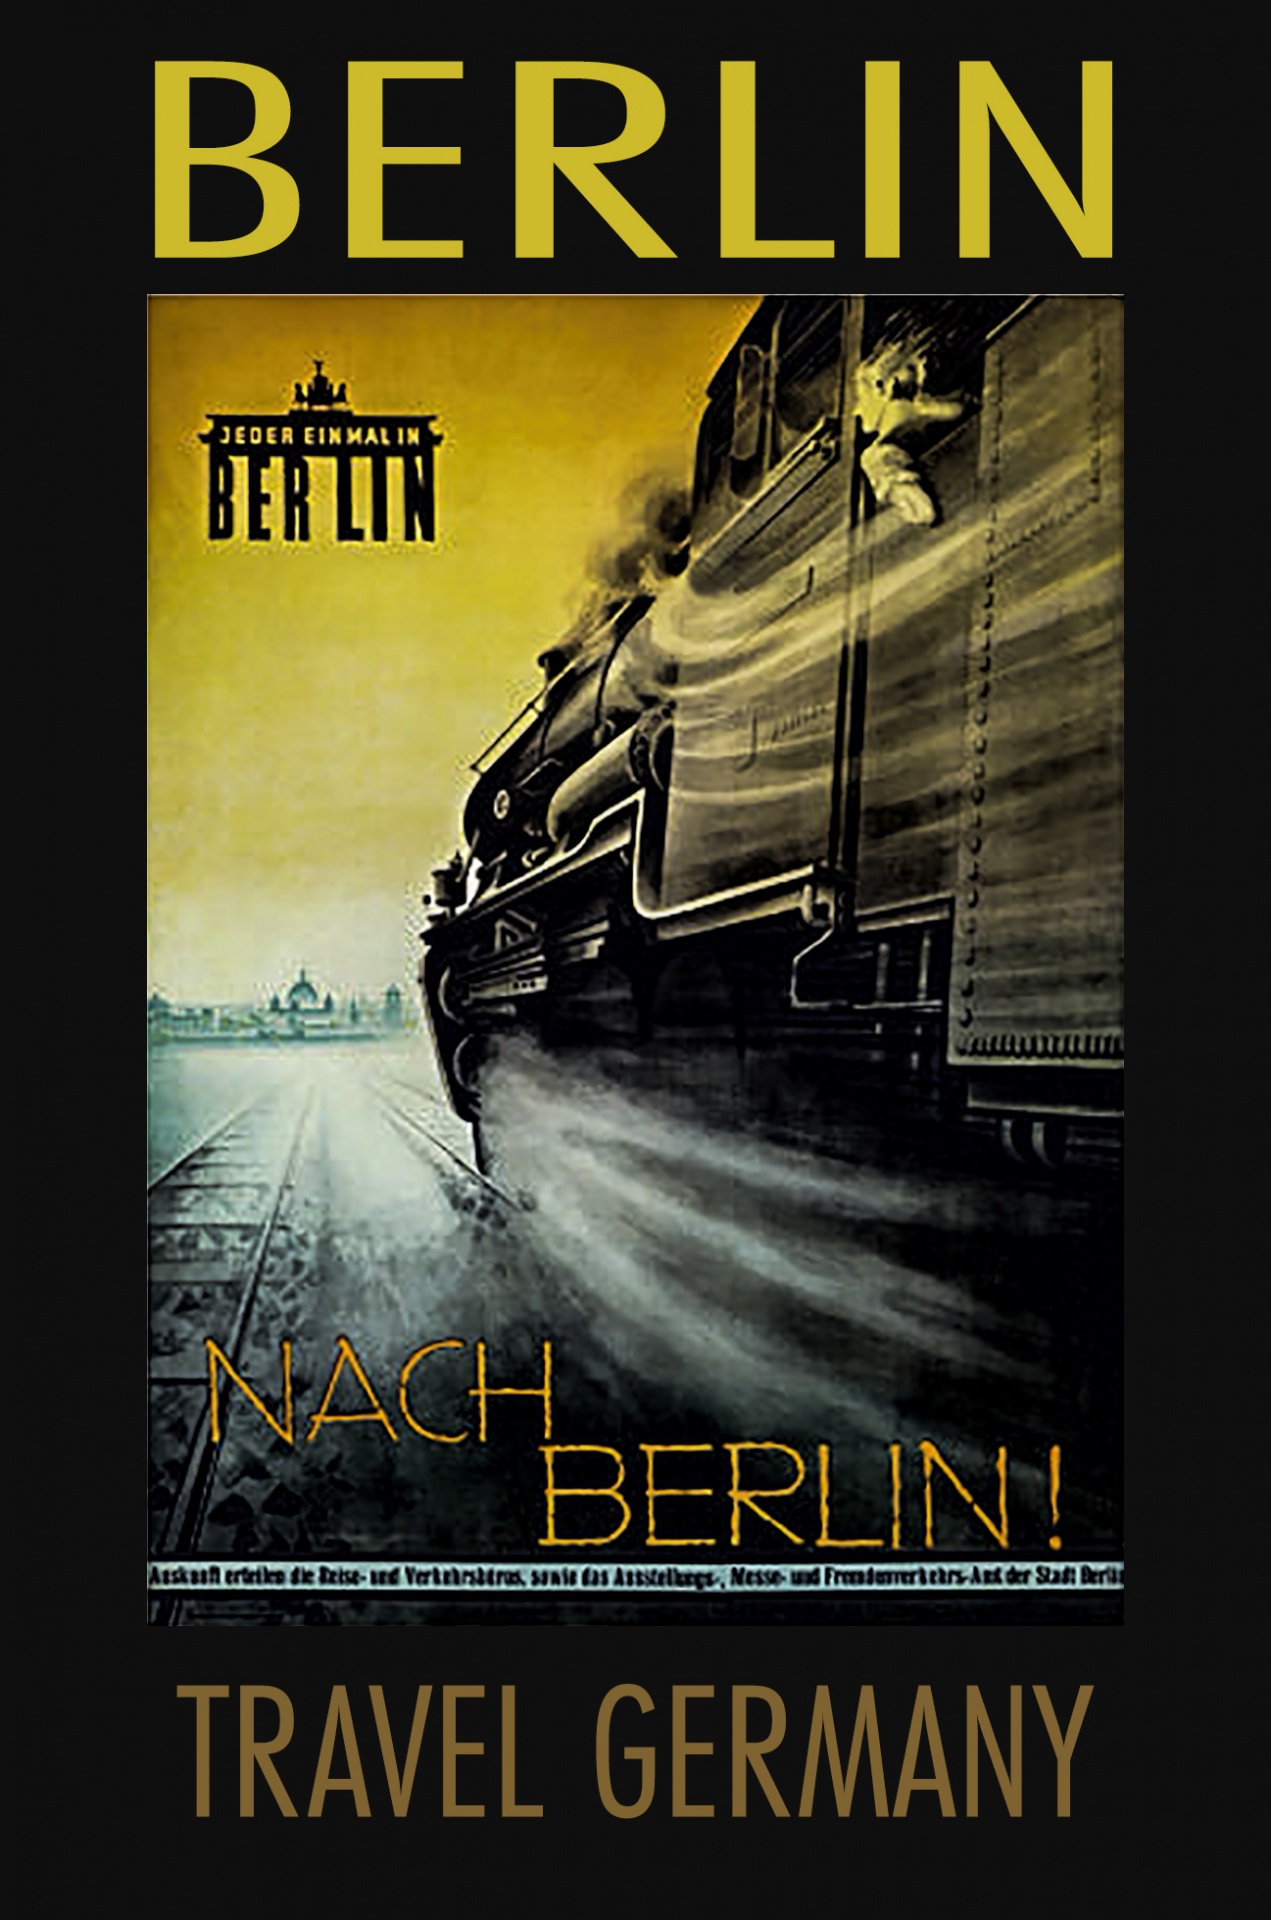 German travel poster, Berlin, Nach Berlin